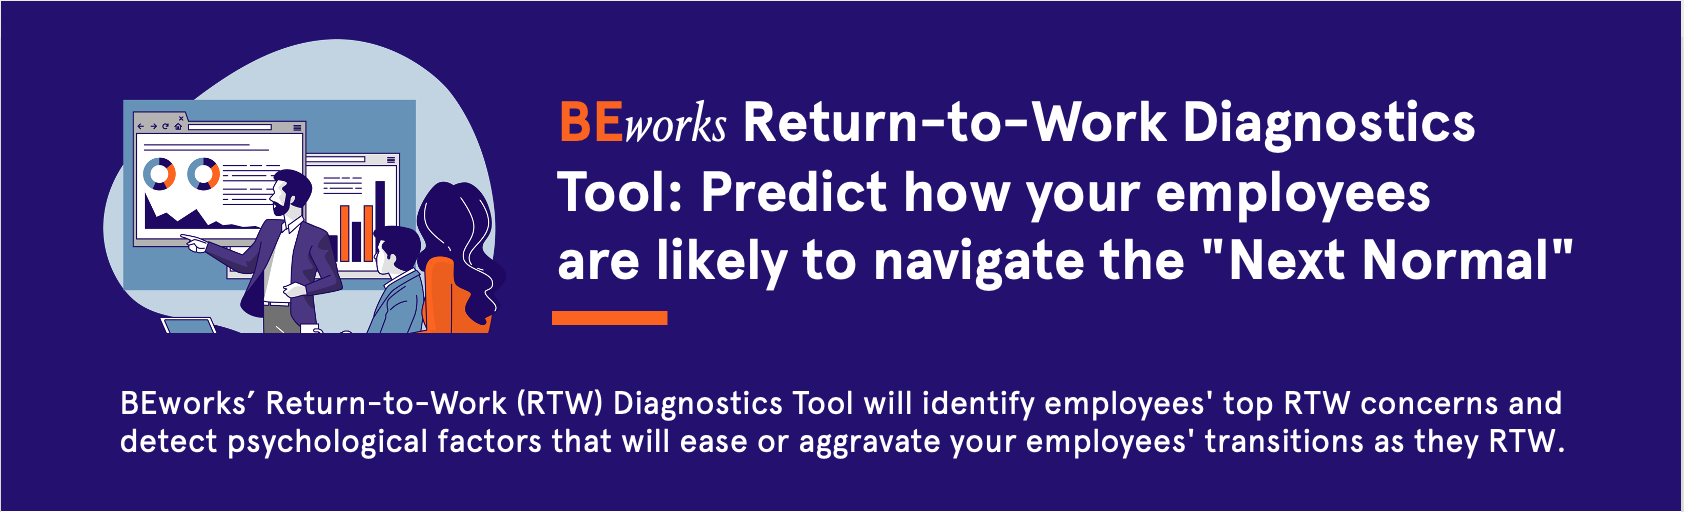 BEworks Return-to-Work Diagnostics Tool Brochure